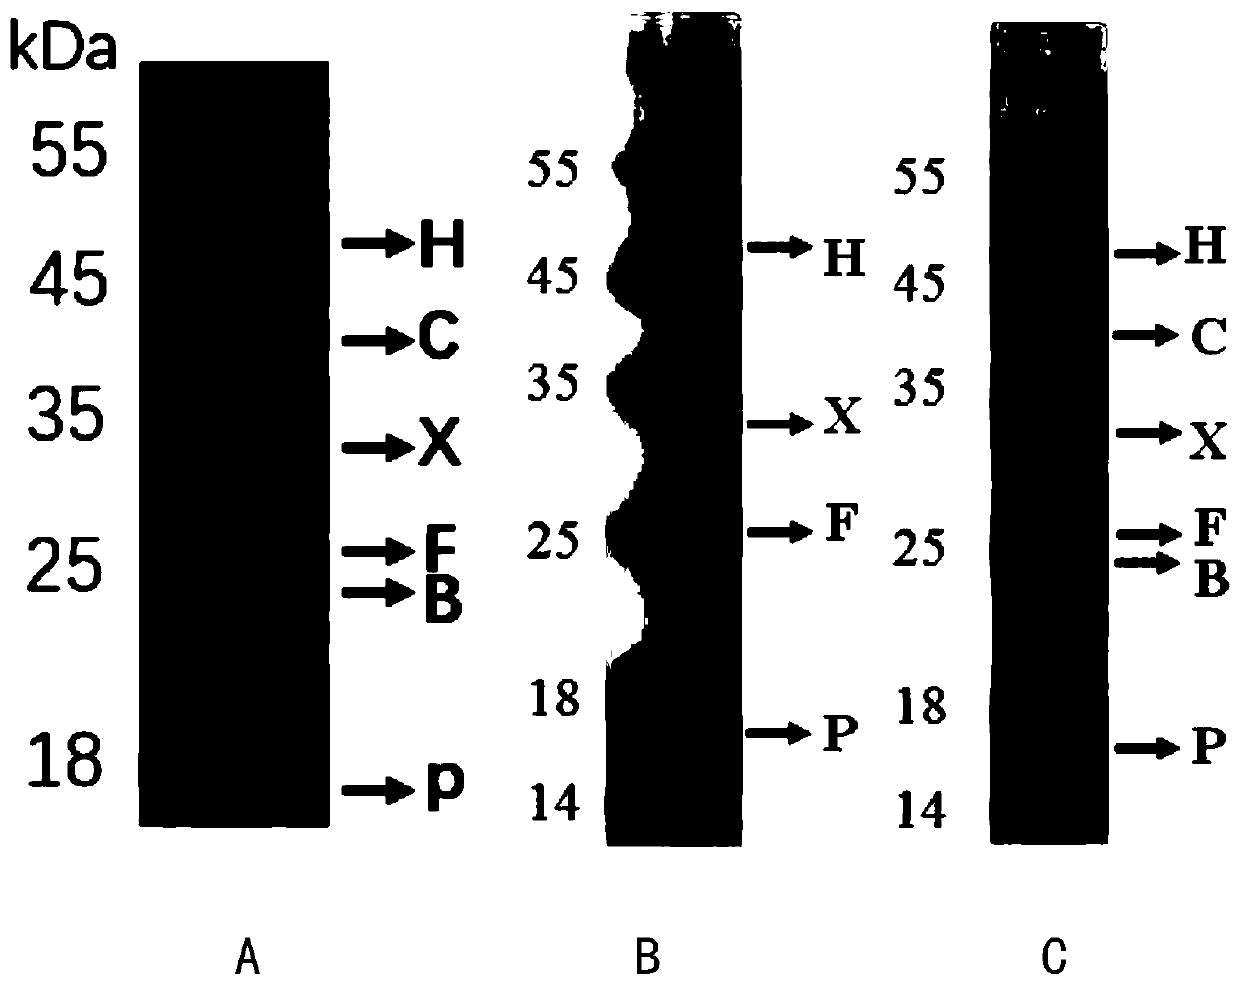 Recombinant escherichia coli for producing melatonin, and construction method and application of recombinant escherichia coli